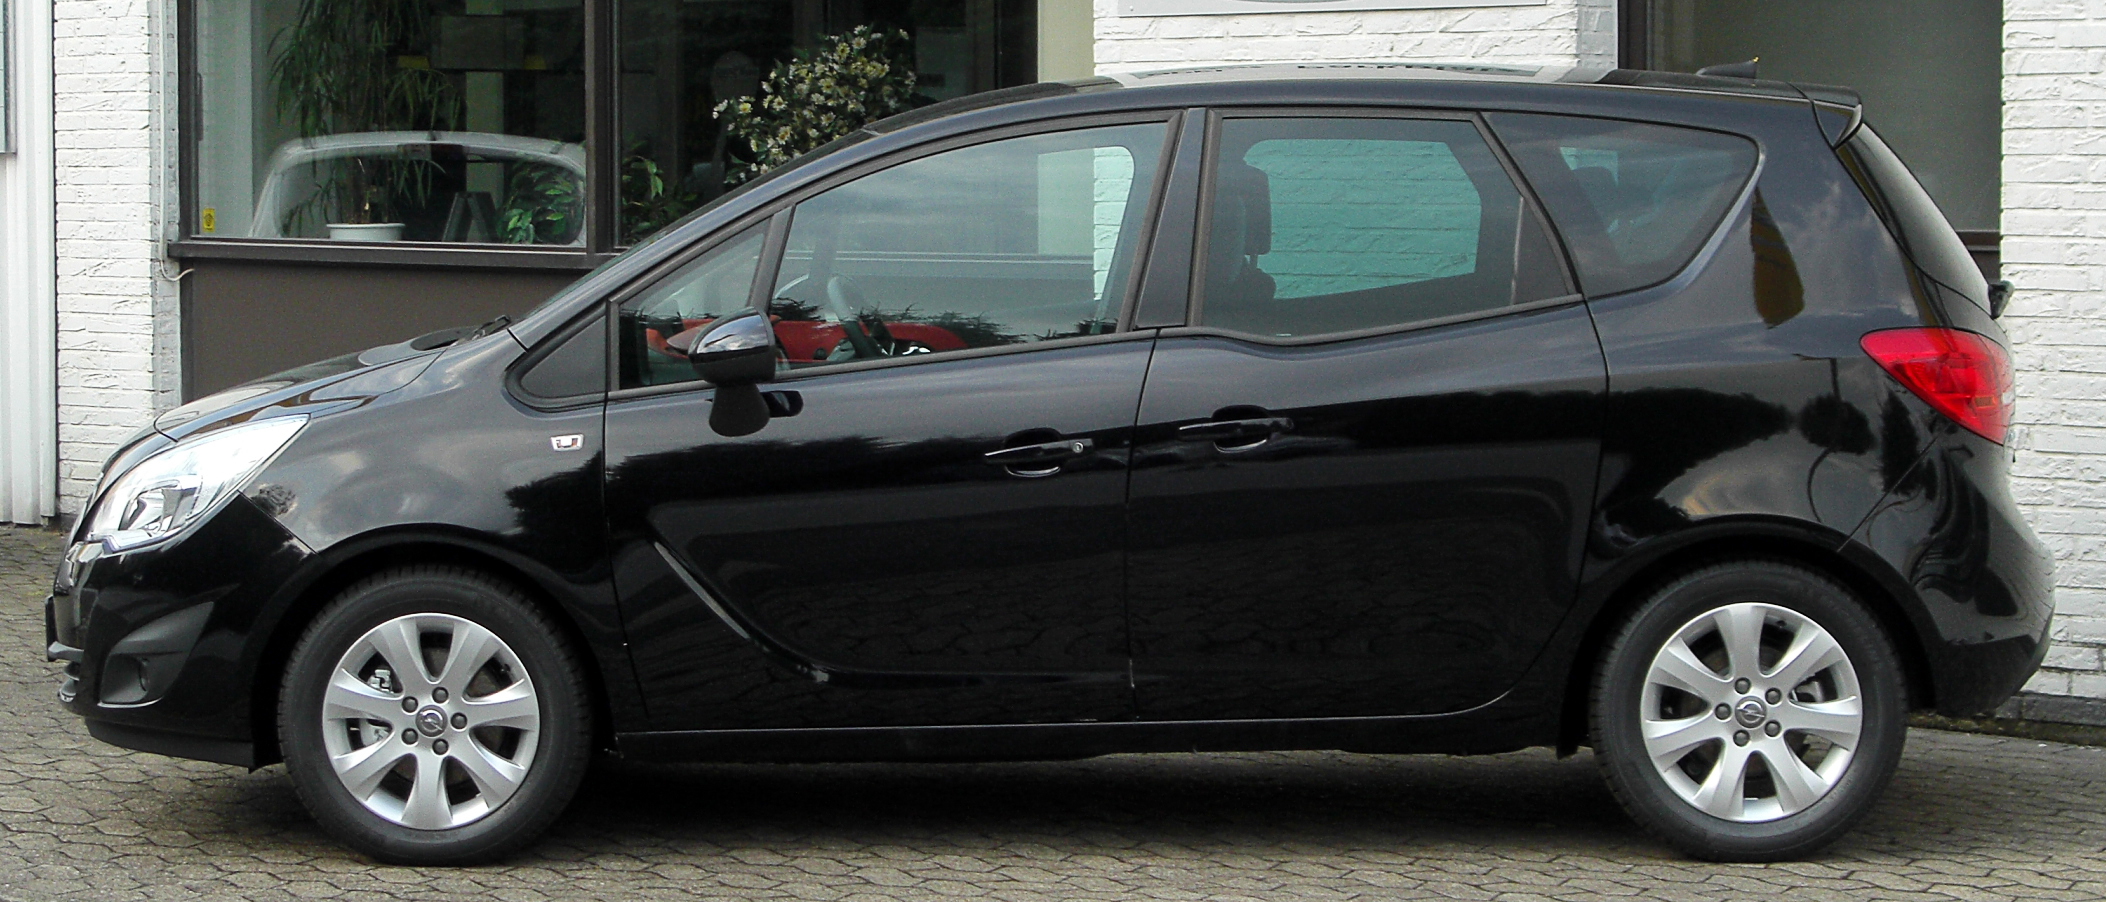 Opel Meriva exterior - Side Profile